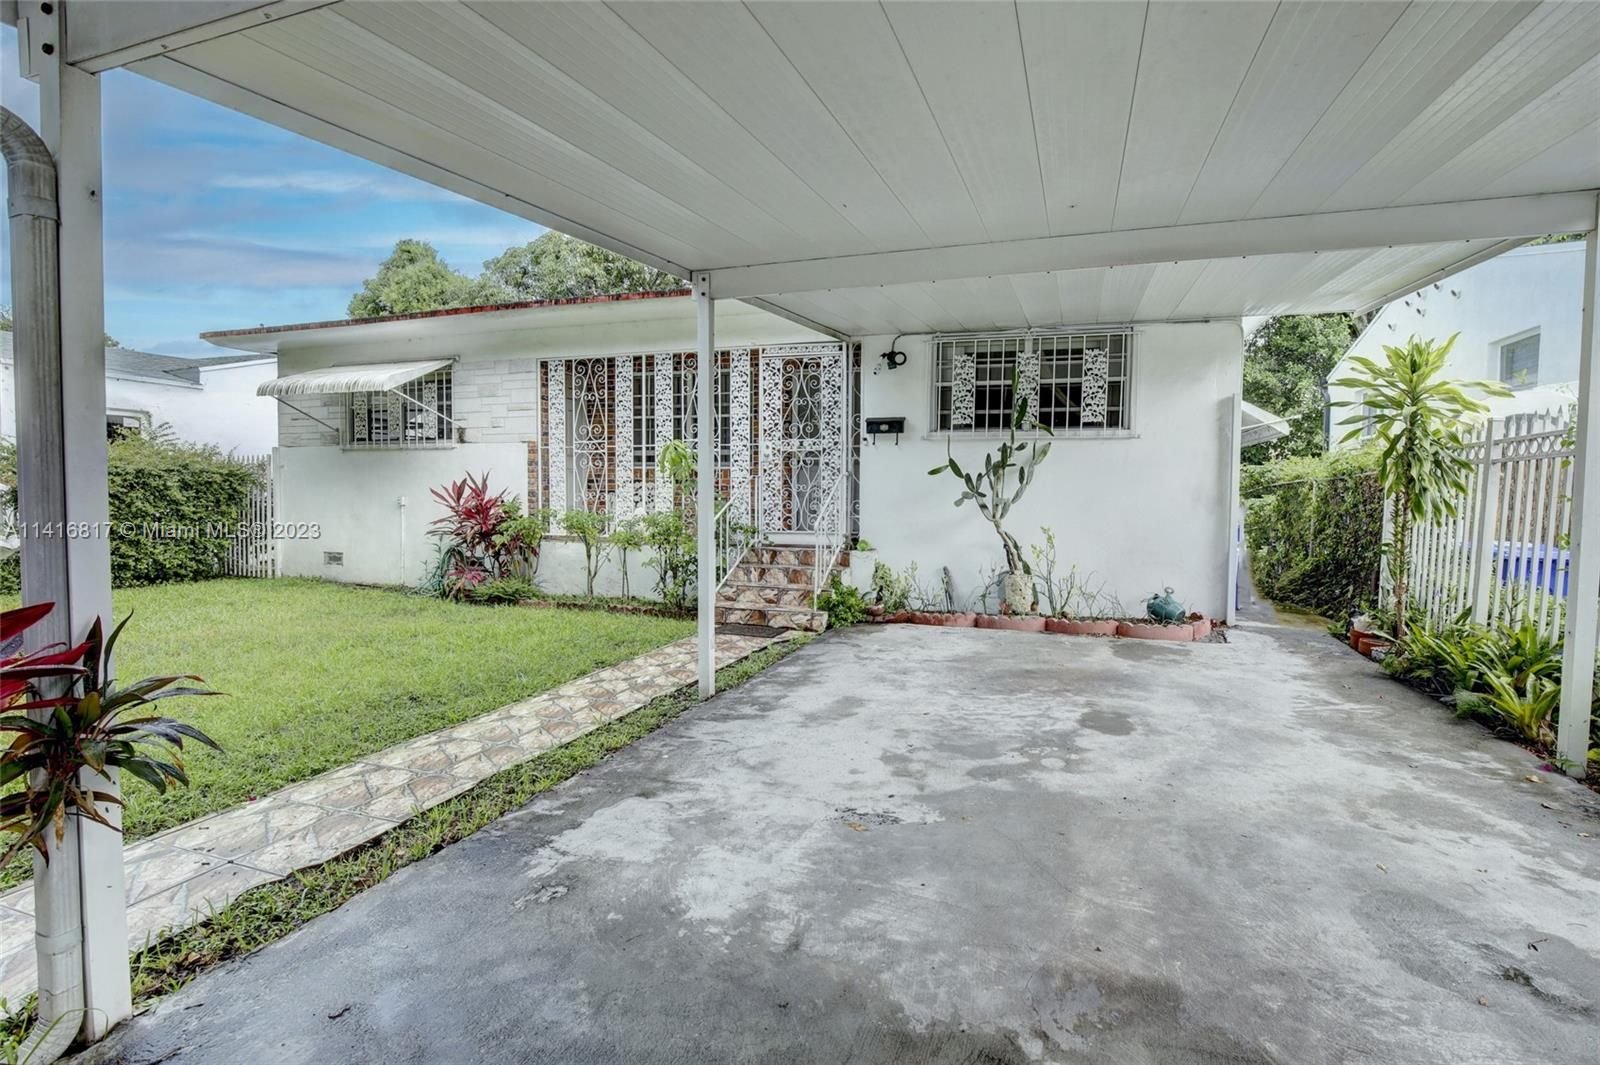 Real estate property located at 920 46th St, Miami-Dade County, Miami, FL